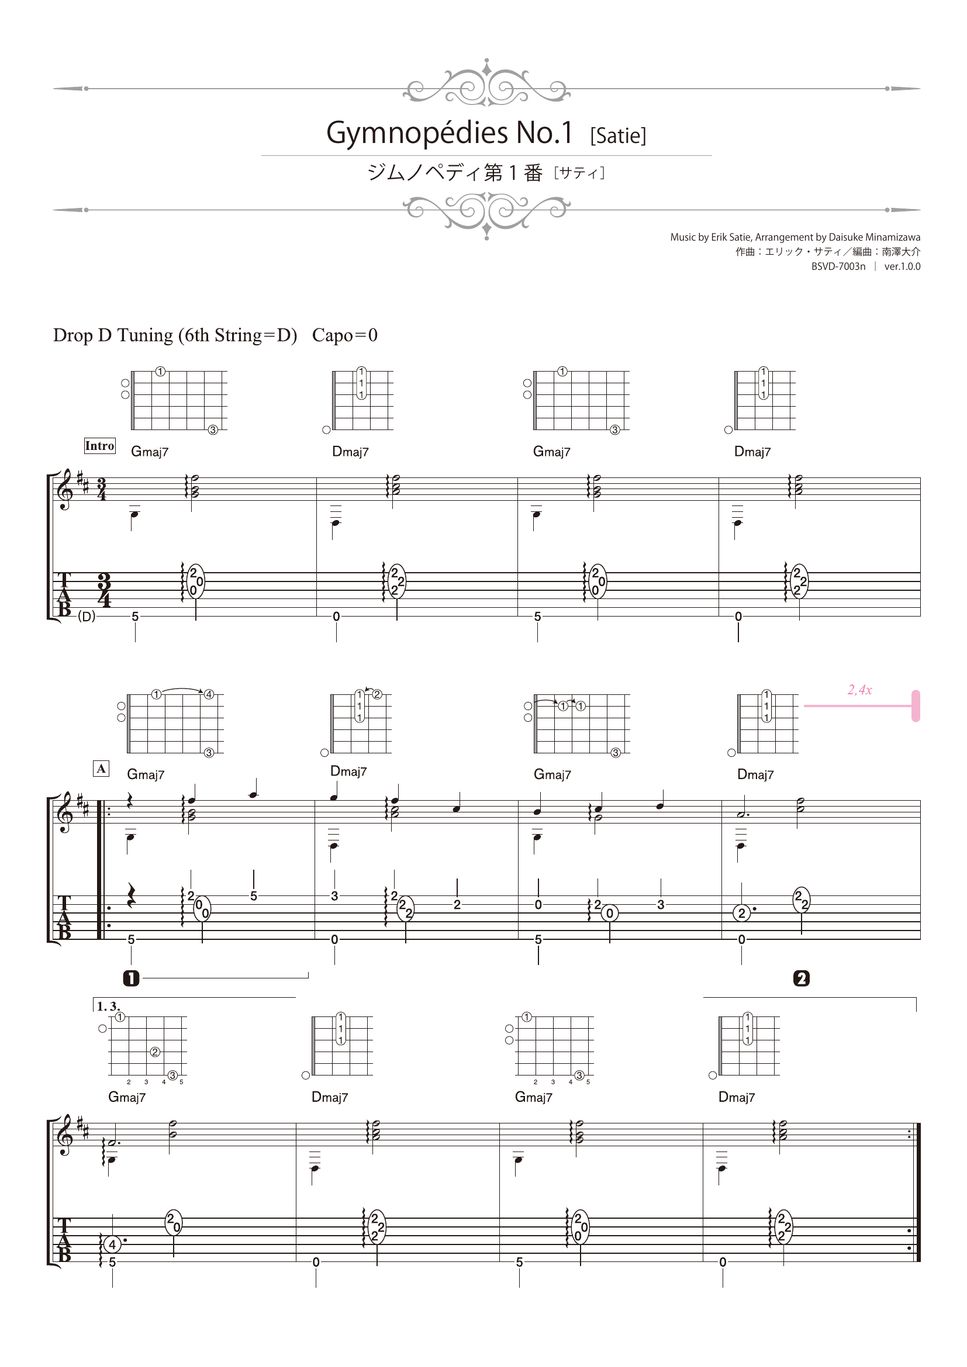 Satie - Gymnopédies No.1 (Solo Guitar) by Daisuke Minamizawa